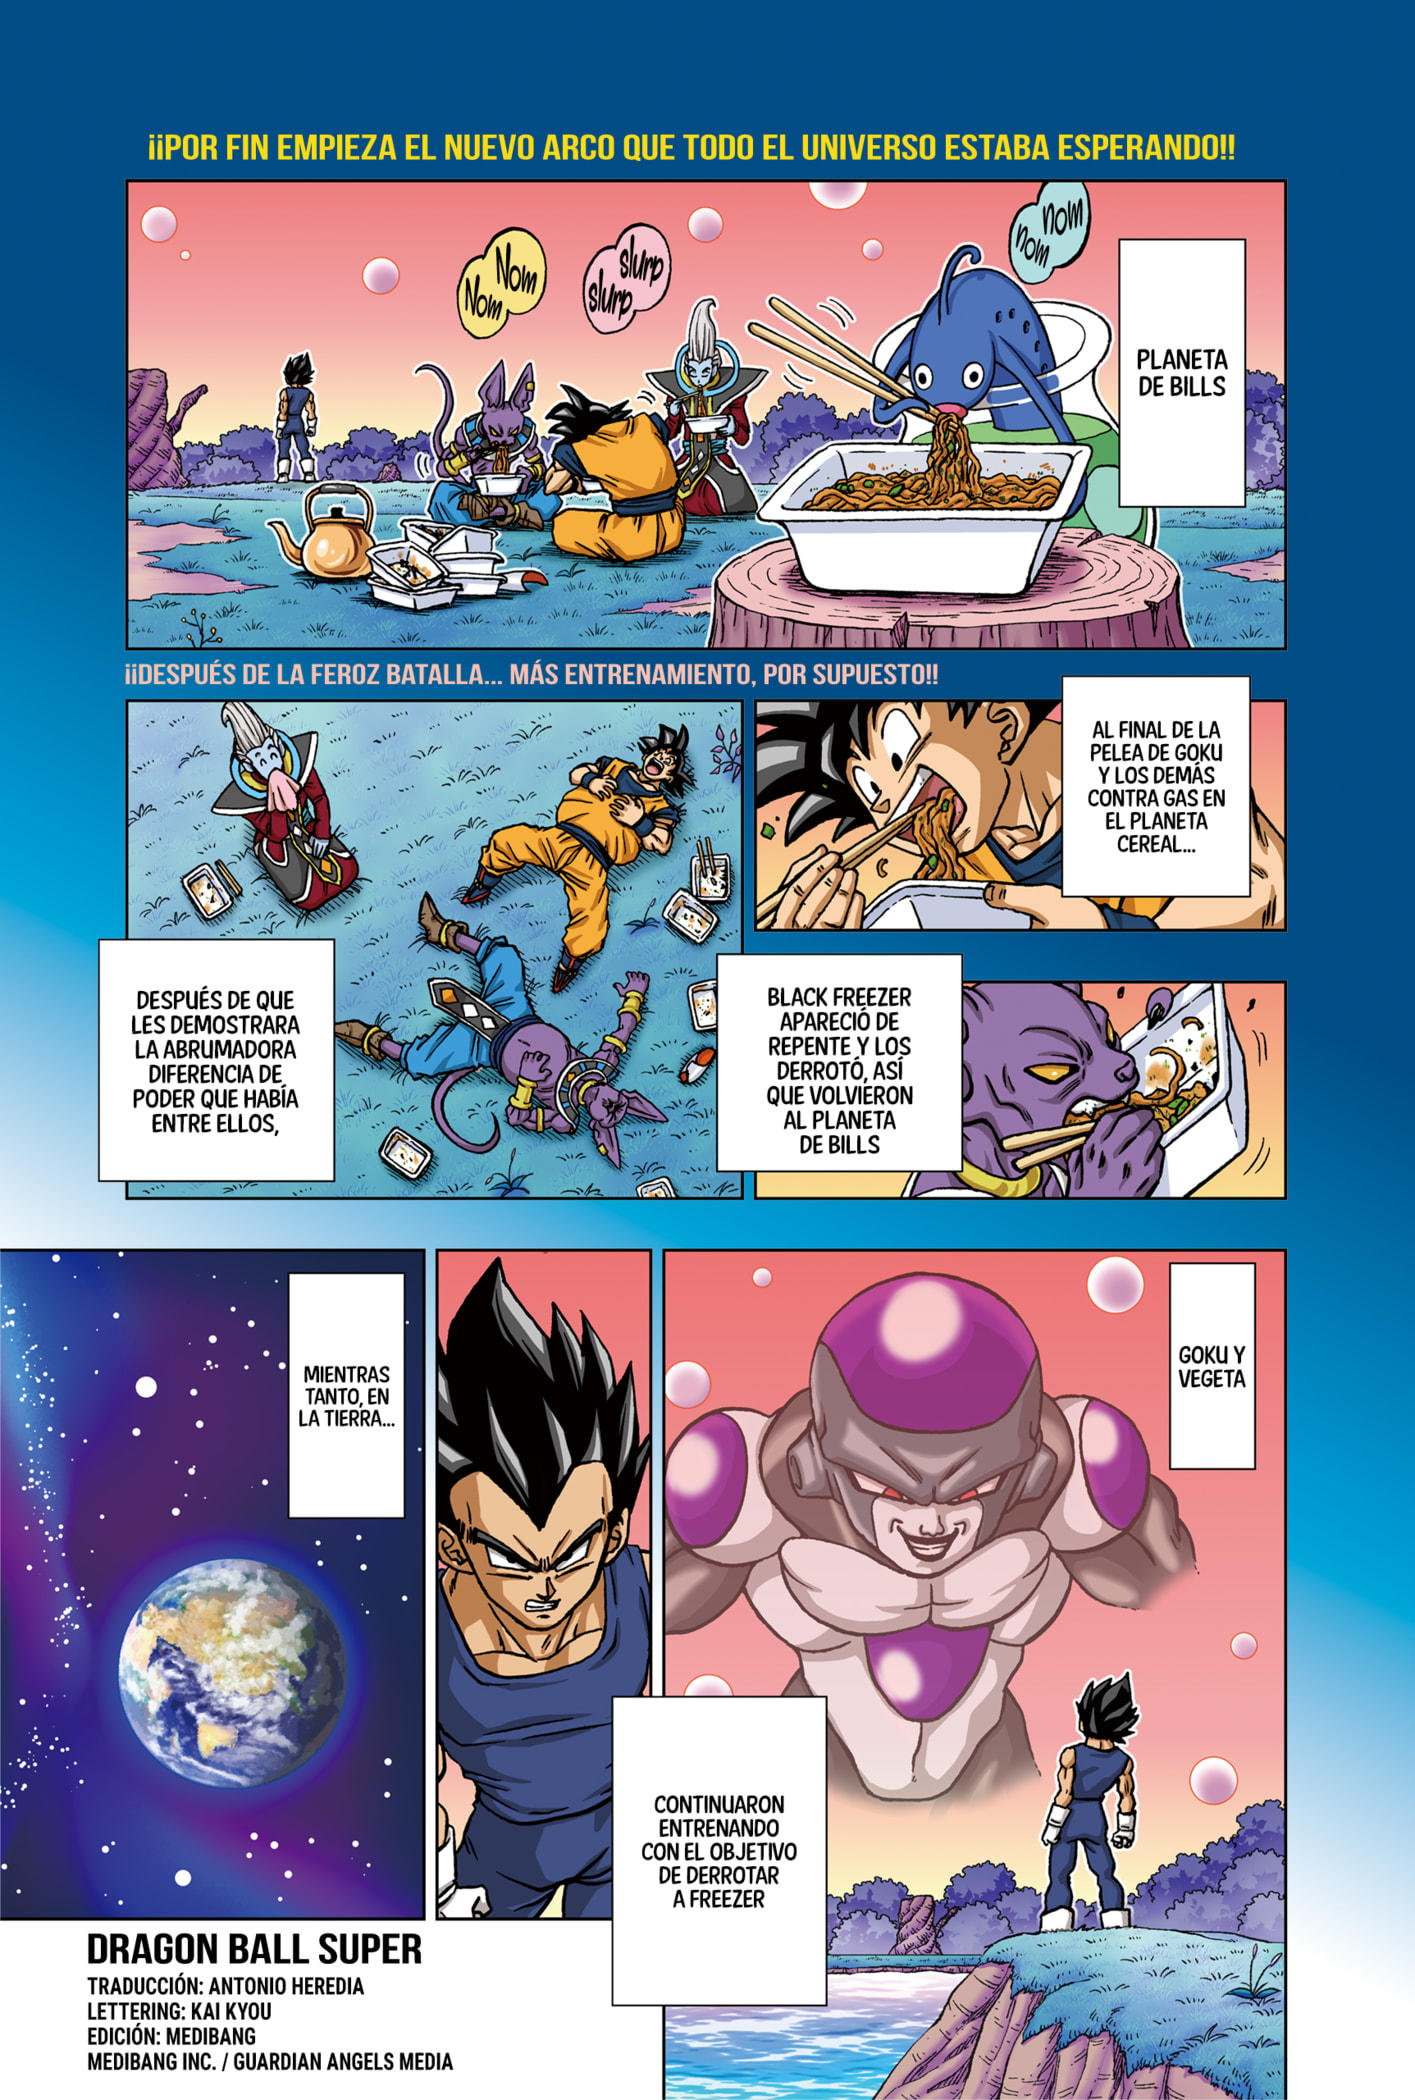 Manga Dragon Ball Super 88 Online - InManga